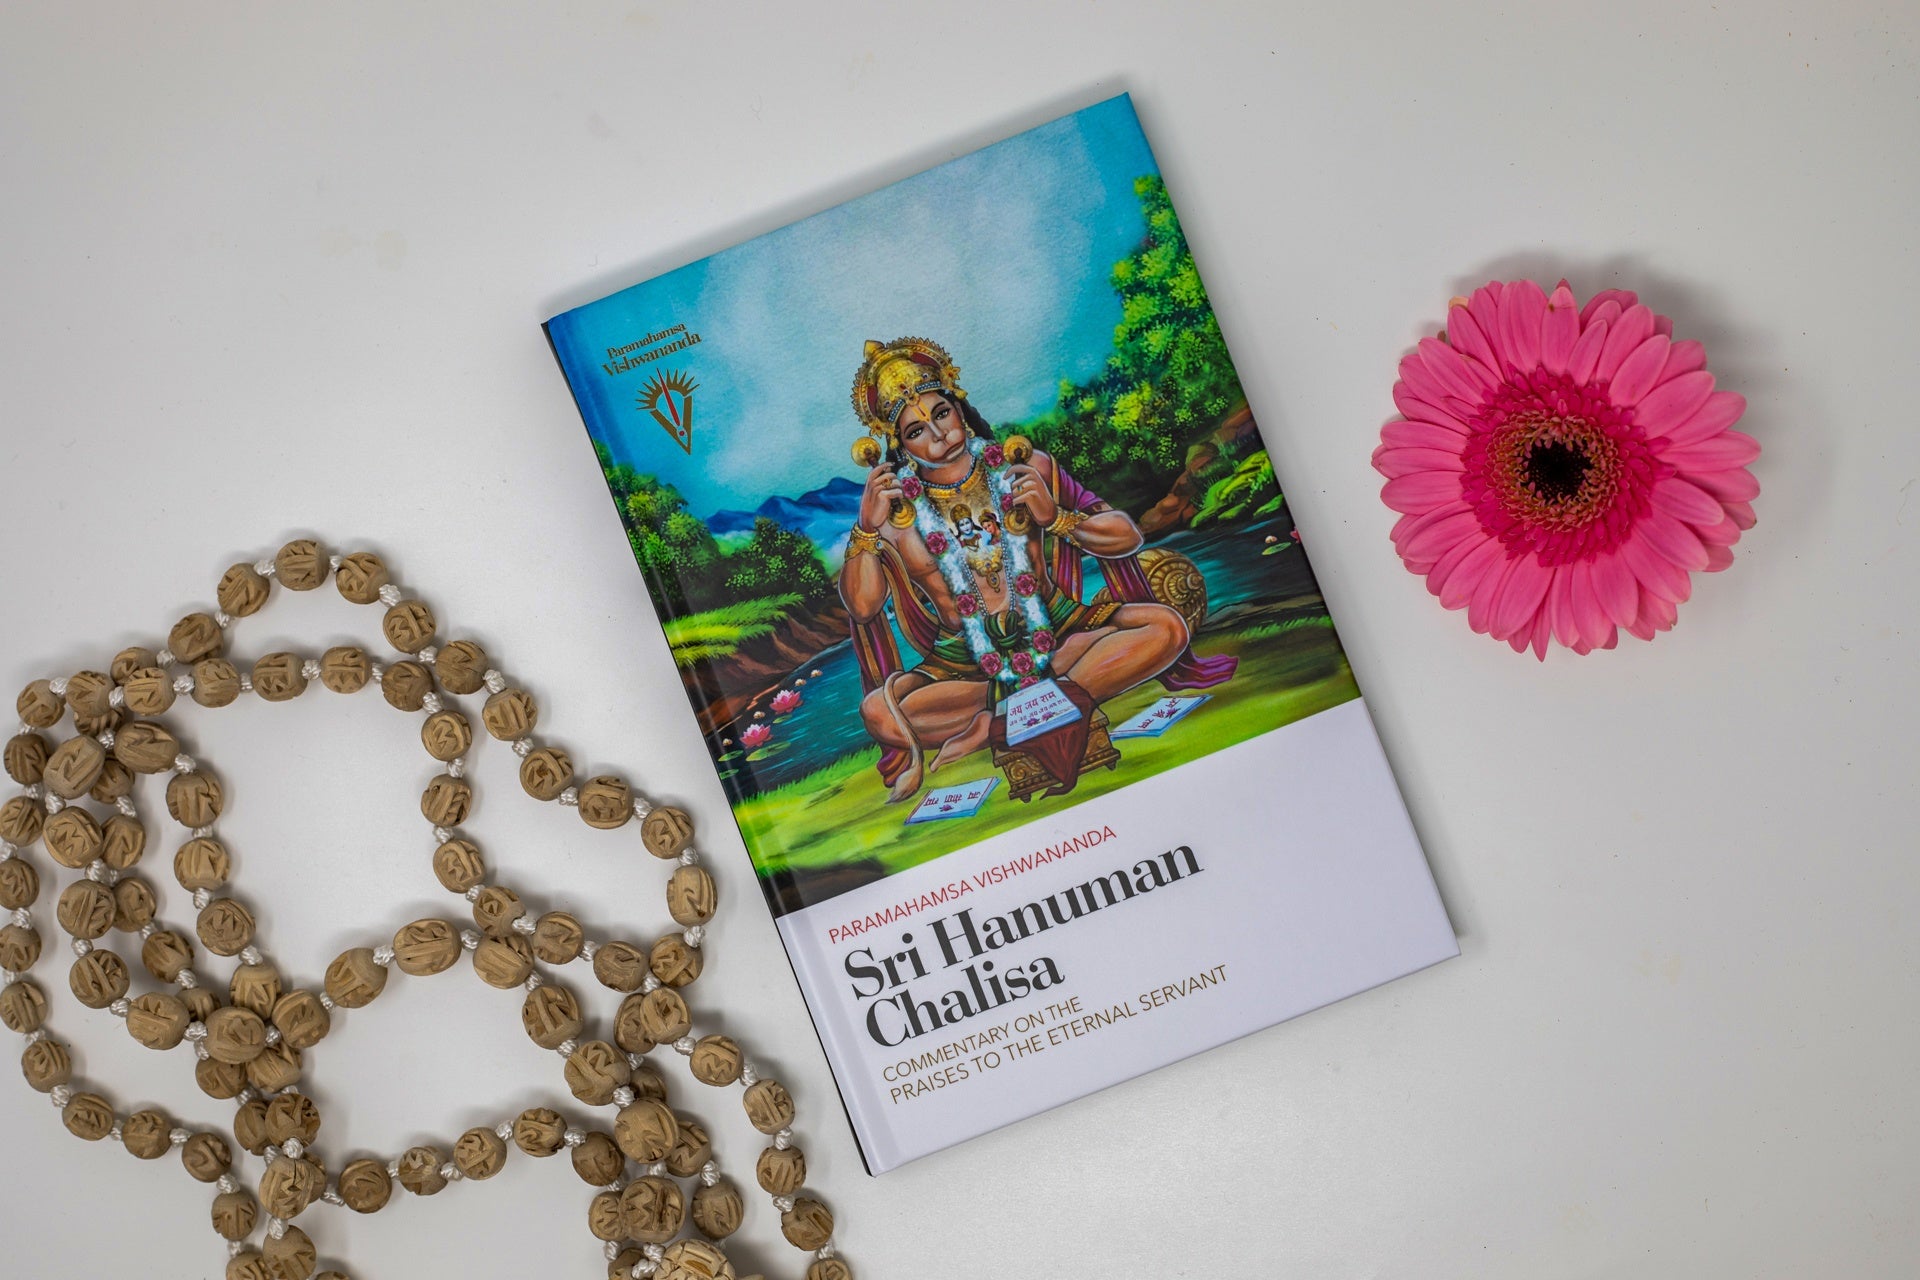 Sri Hanuman Chalisa - Commentary on the Praises to the Eternal Servant